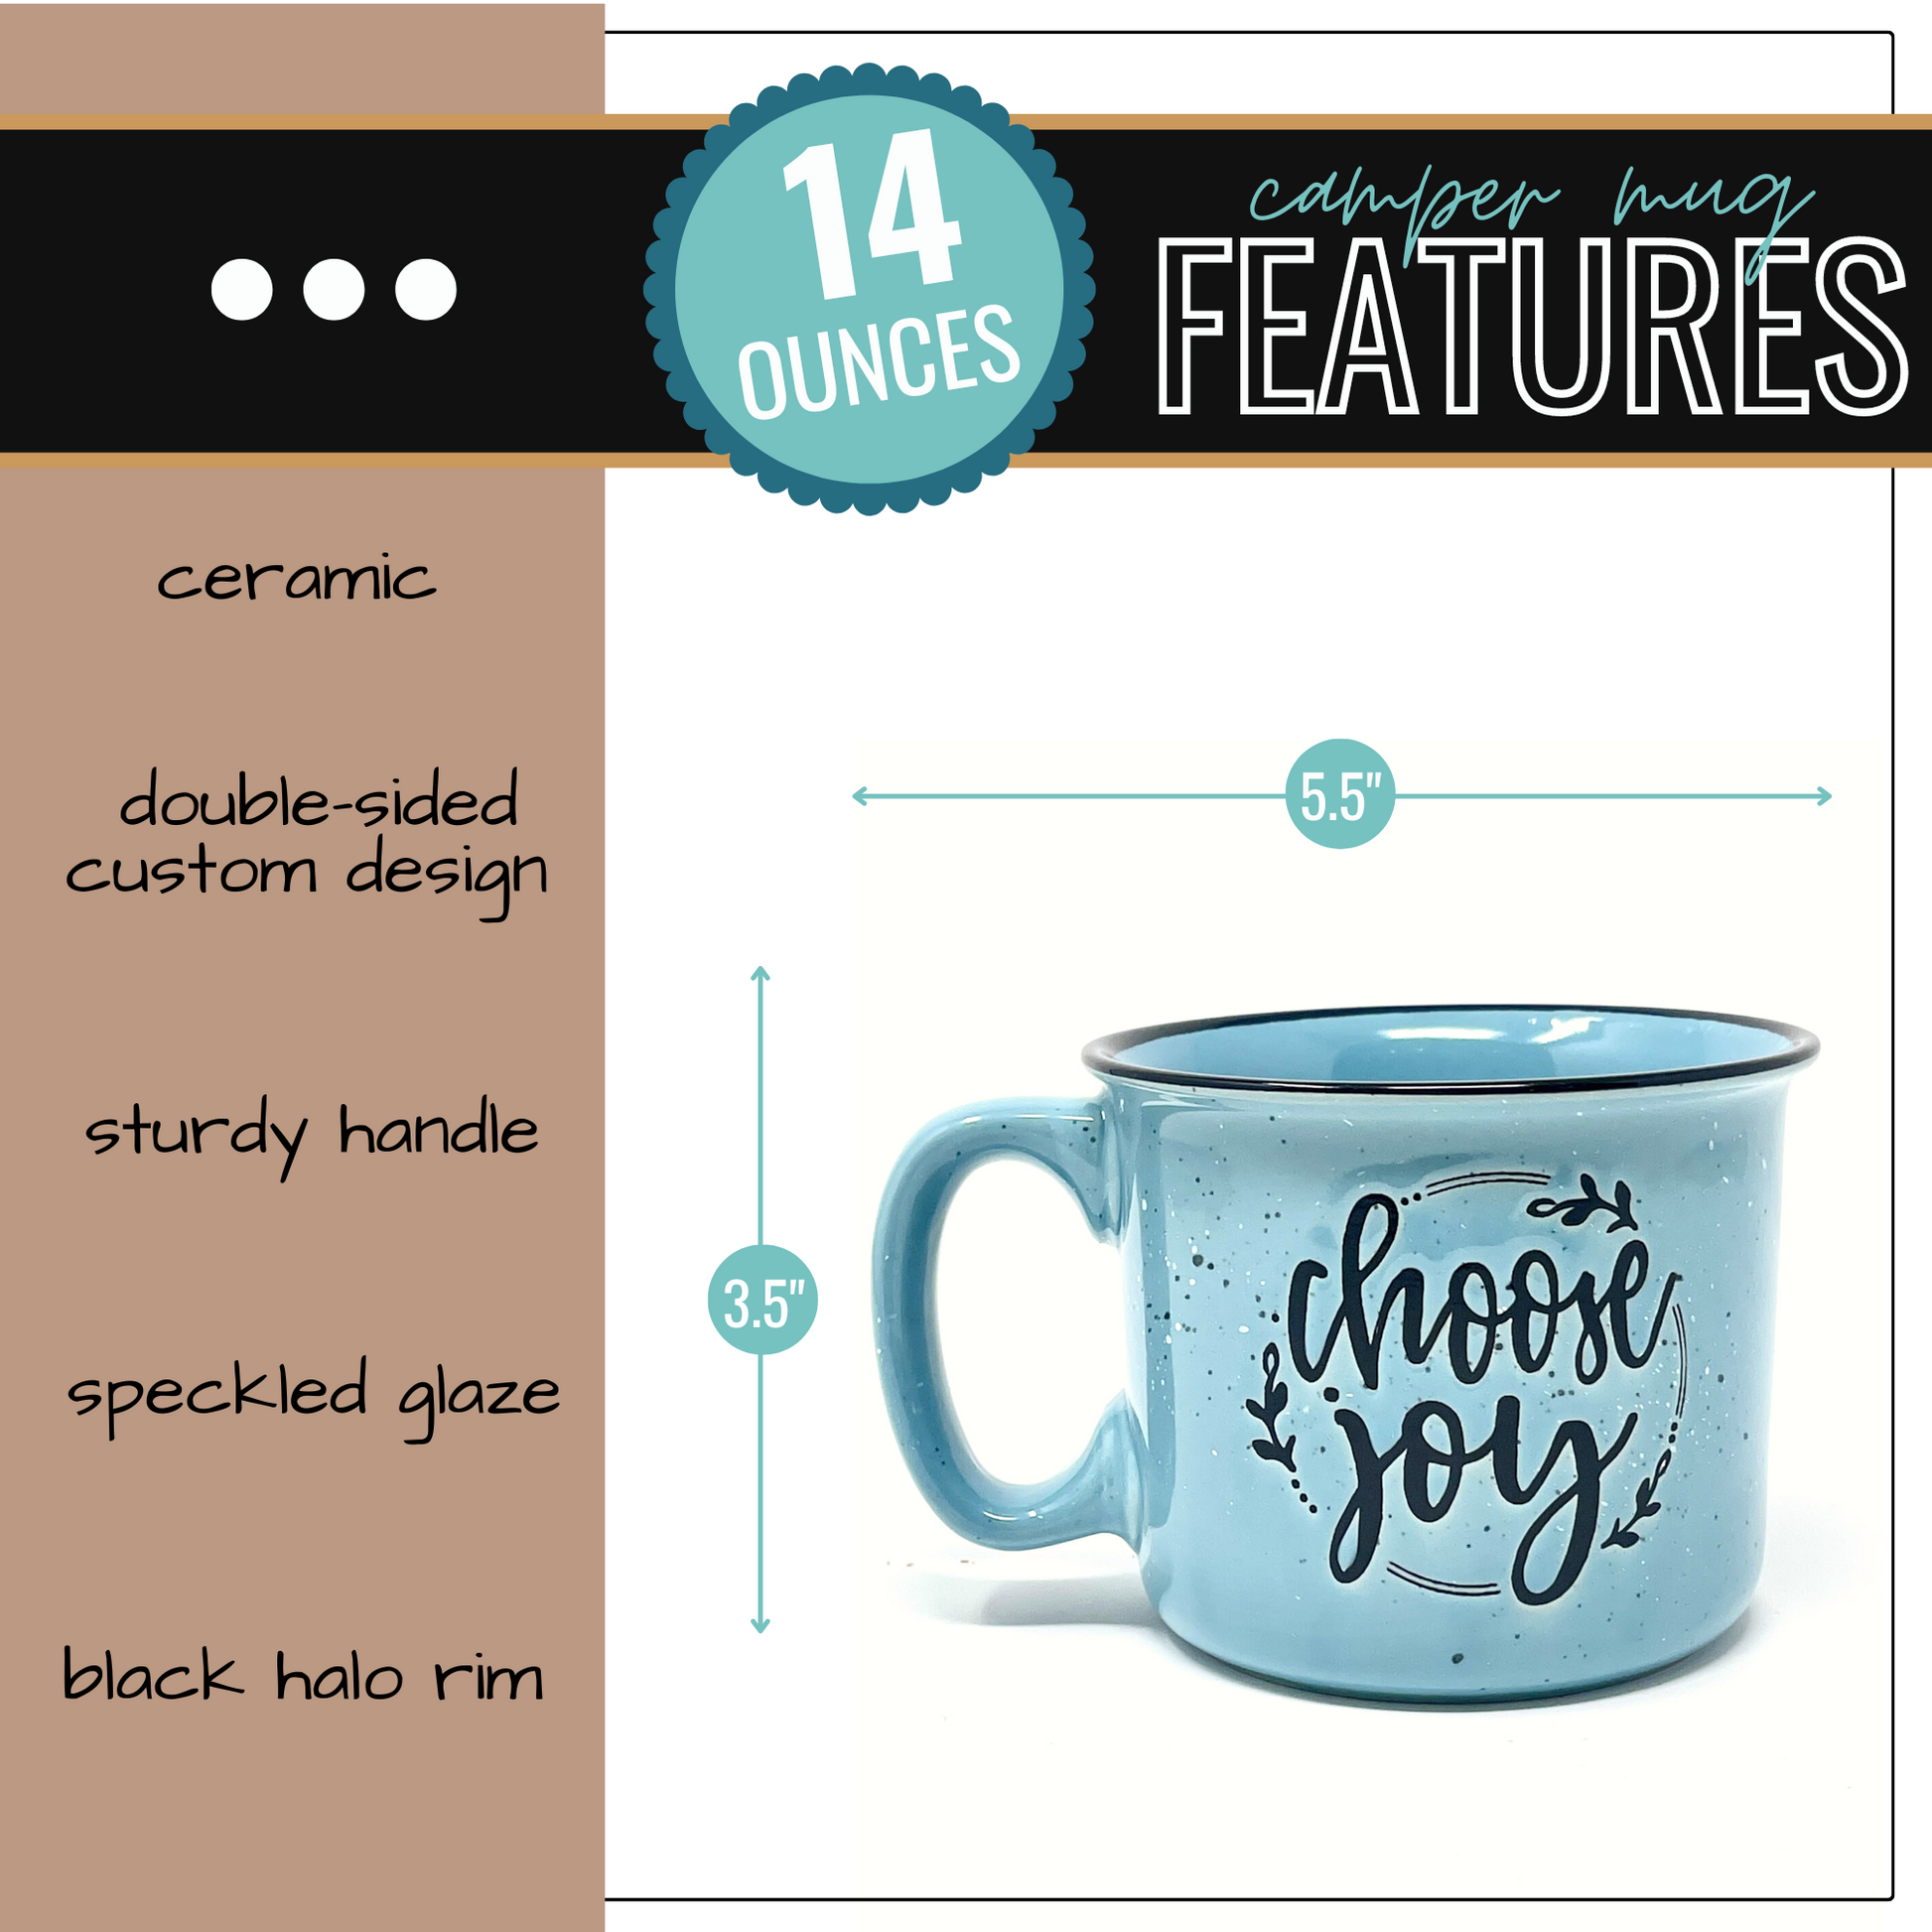 Choose Joy Stoneware Coffee Mug - A Cottage in the City